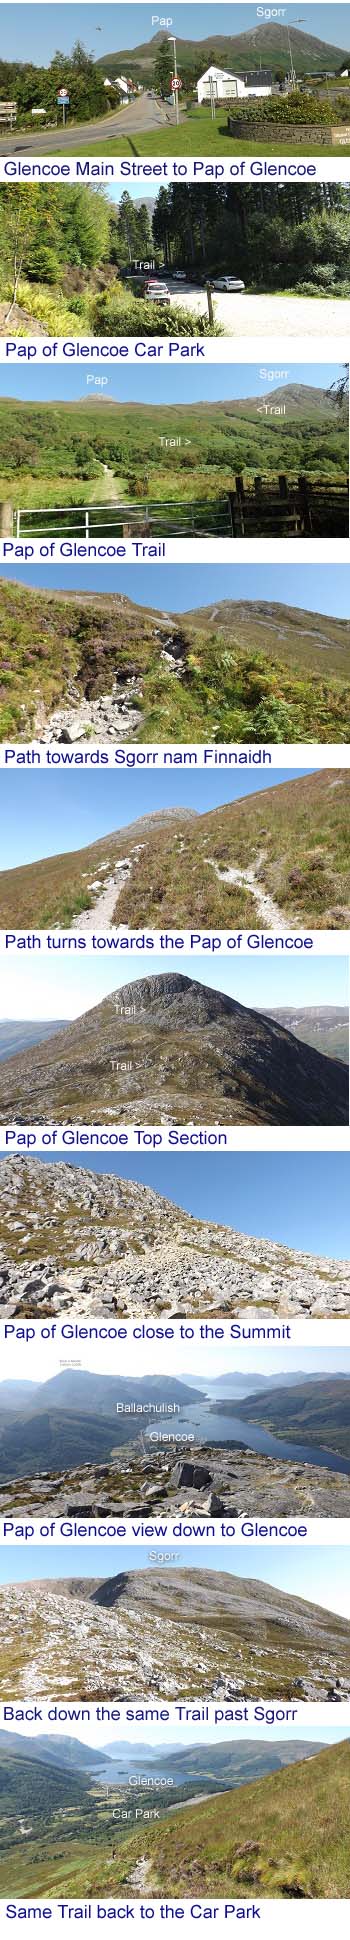 Pap of Glencoe Images